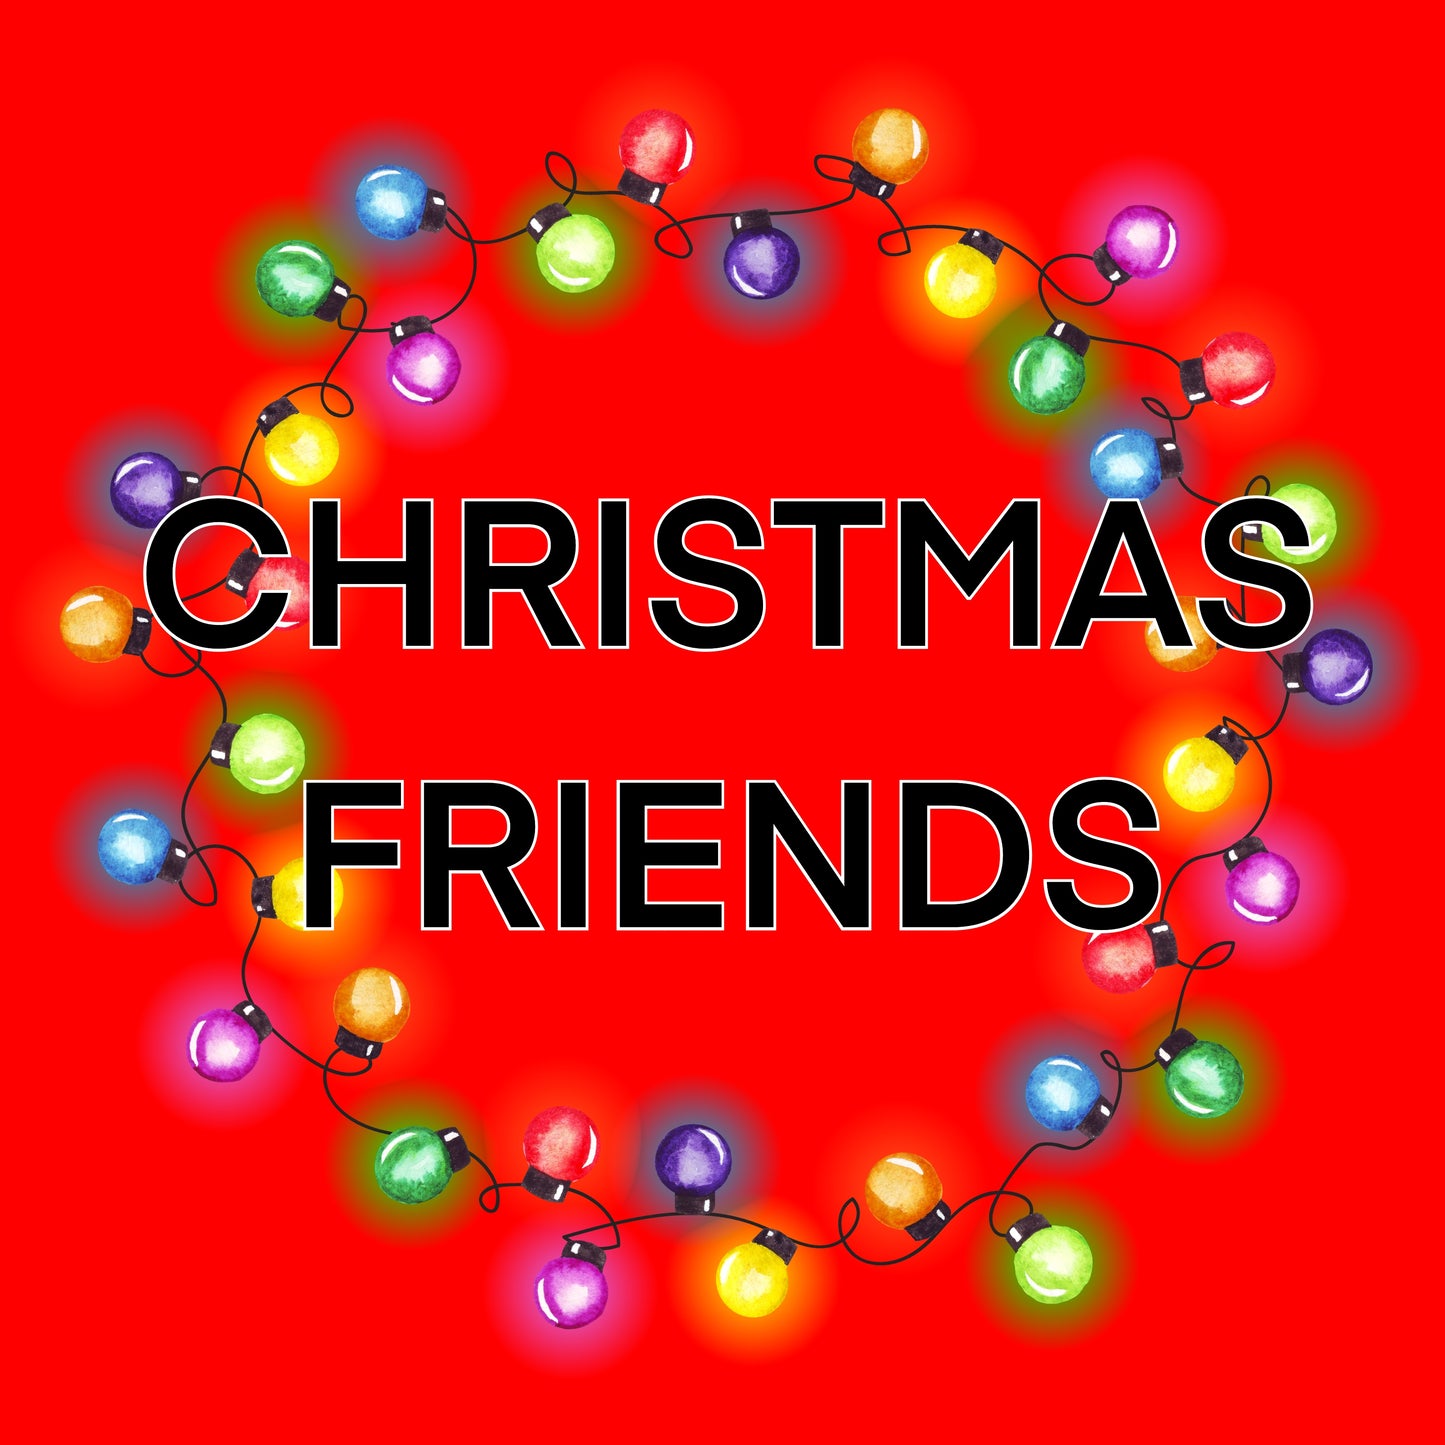 Christmas friends